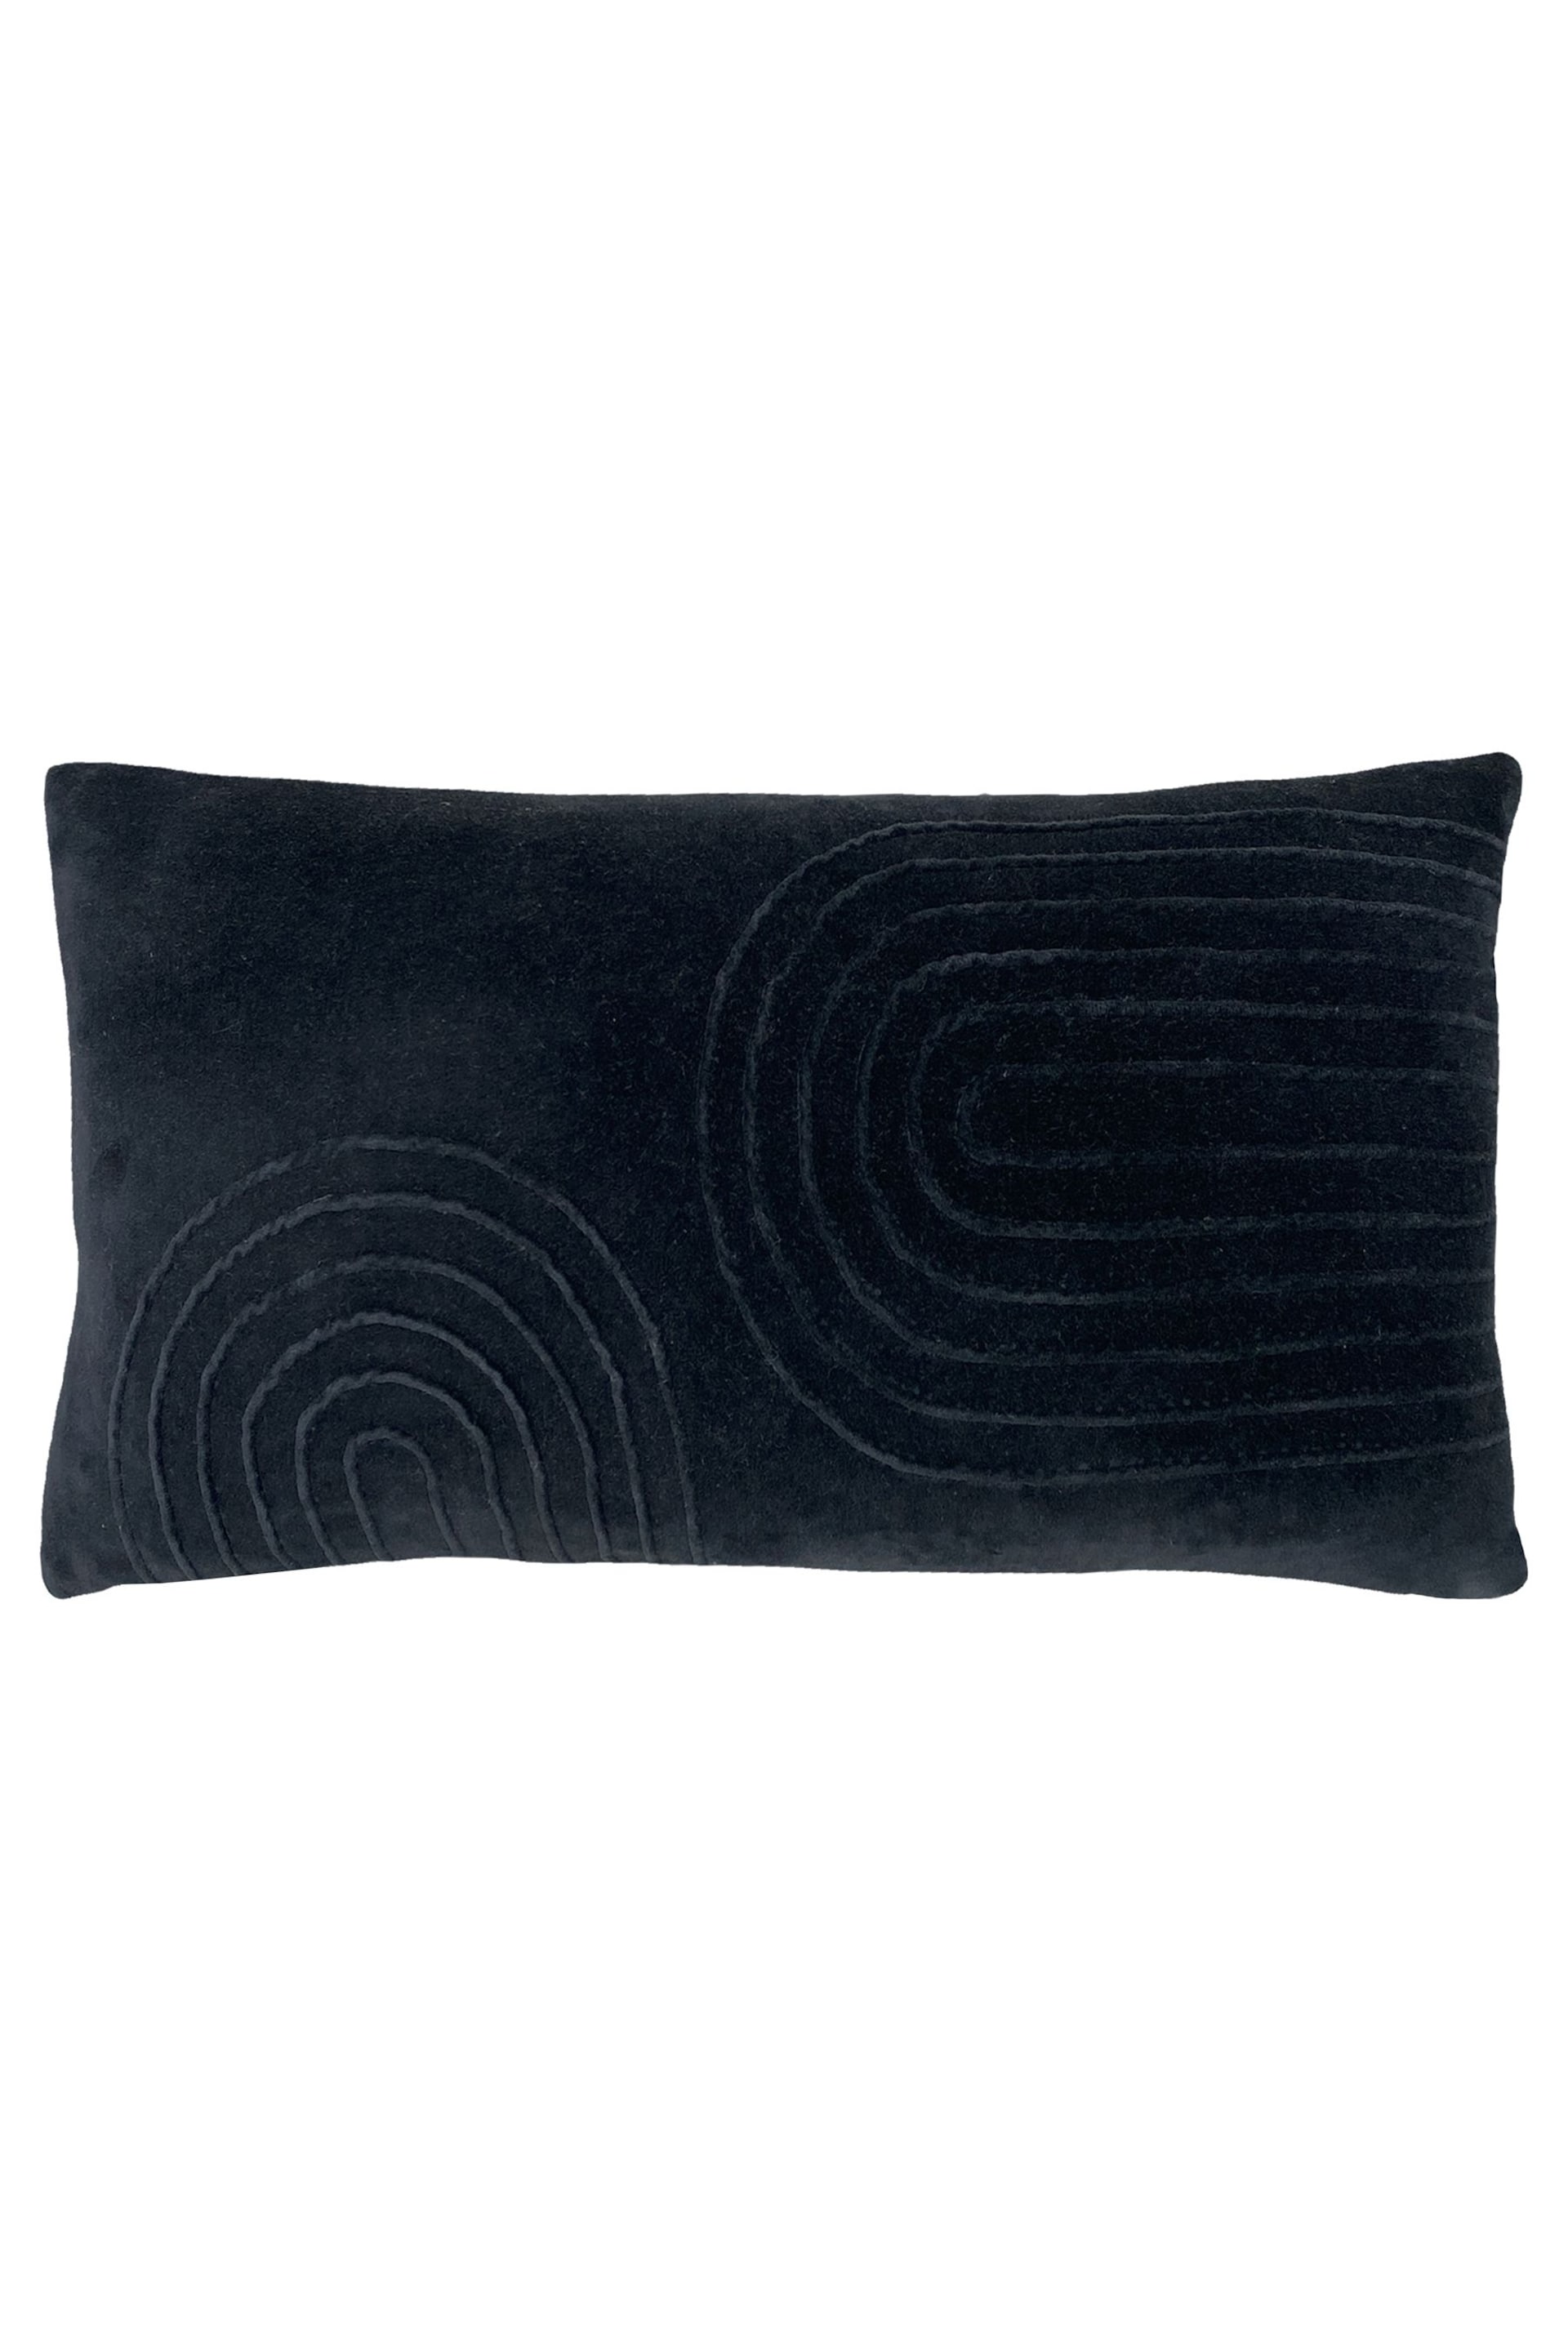 furn. Black Mangata Cushion - Image 1 of 3